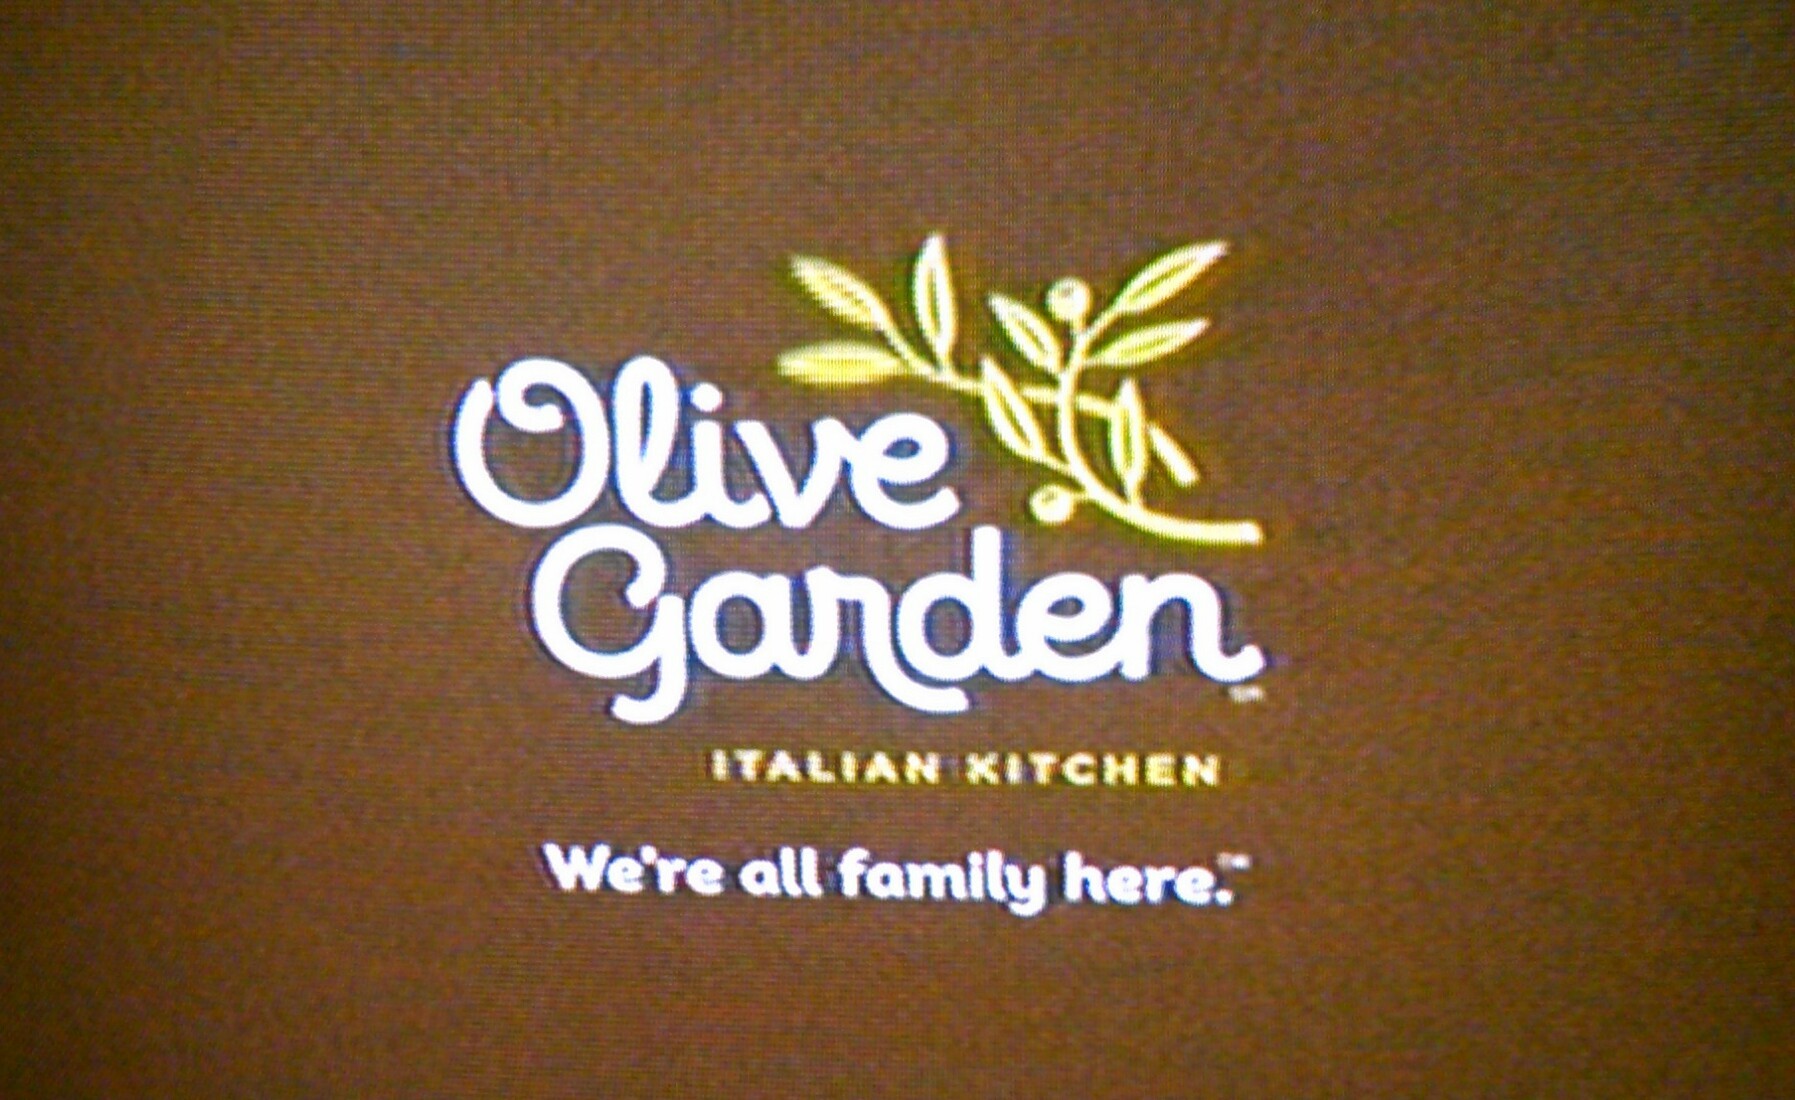 Olive Garden business tagline